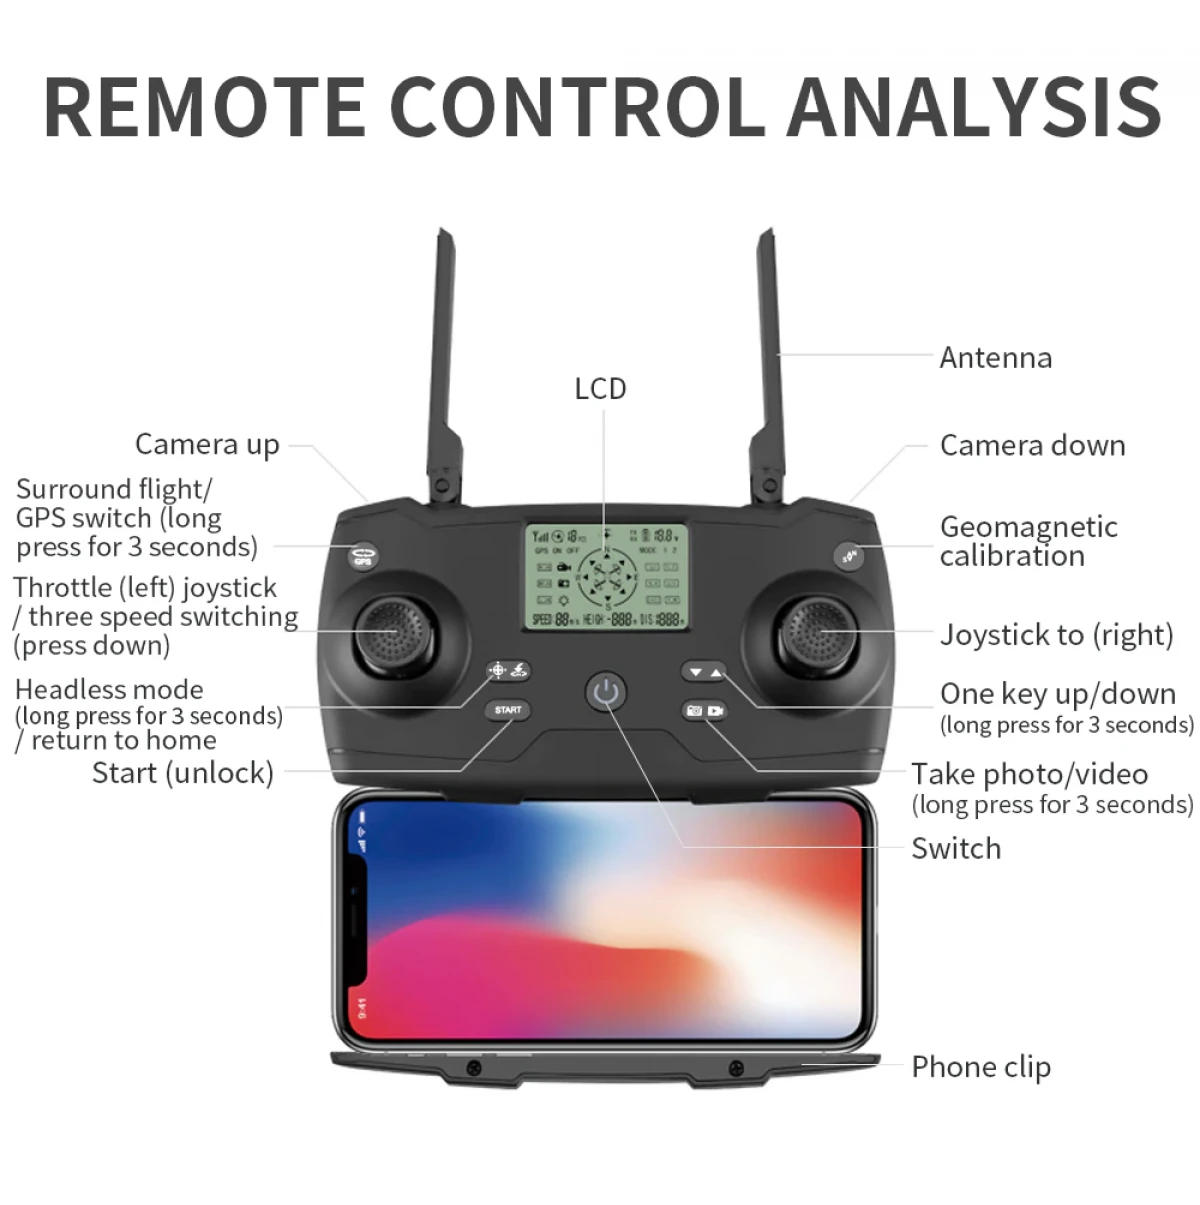 Drone GPS professionnel 8k